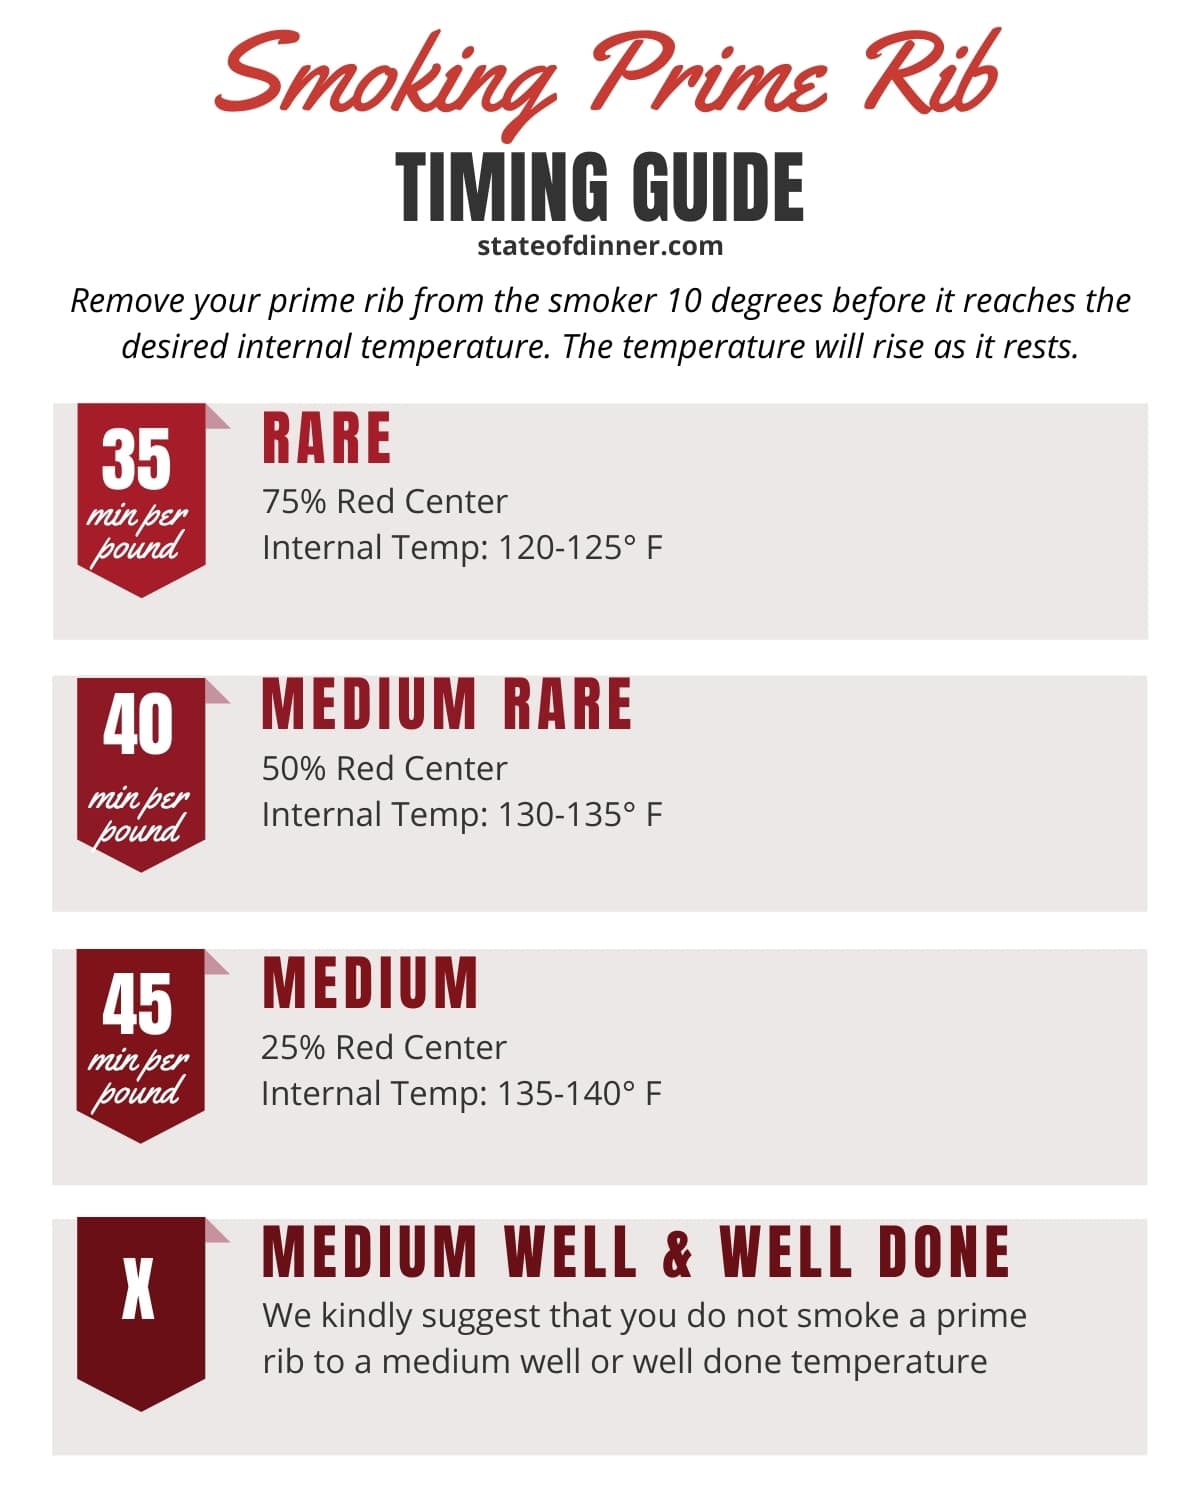 Timing guide for smoking prime rib.